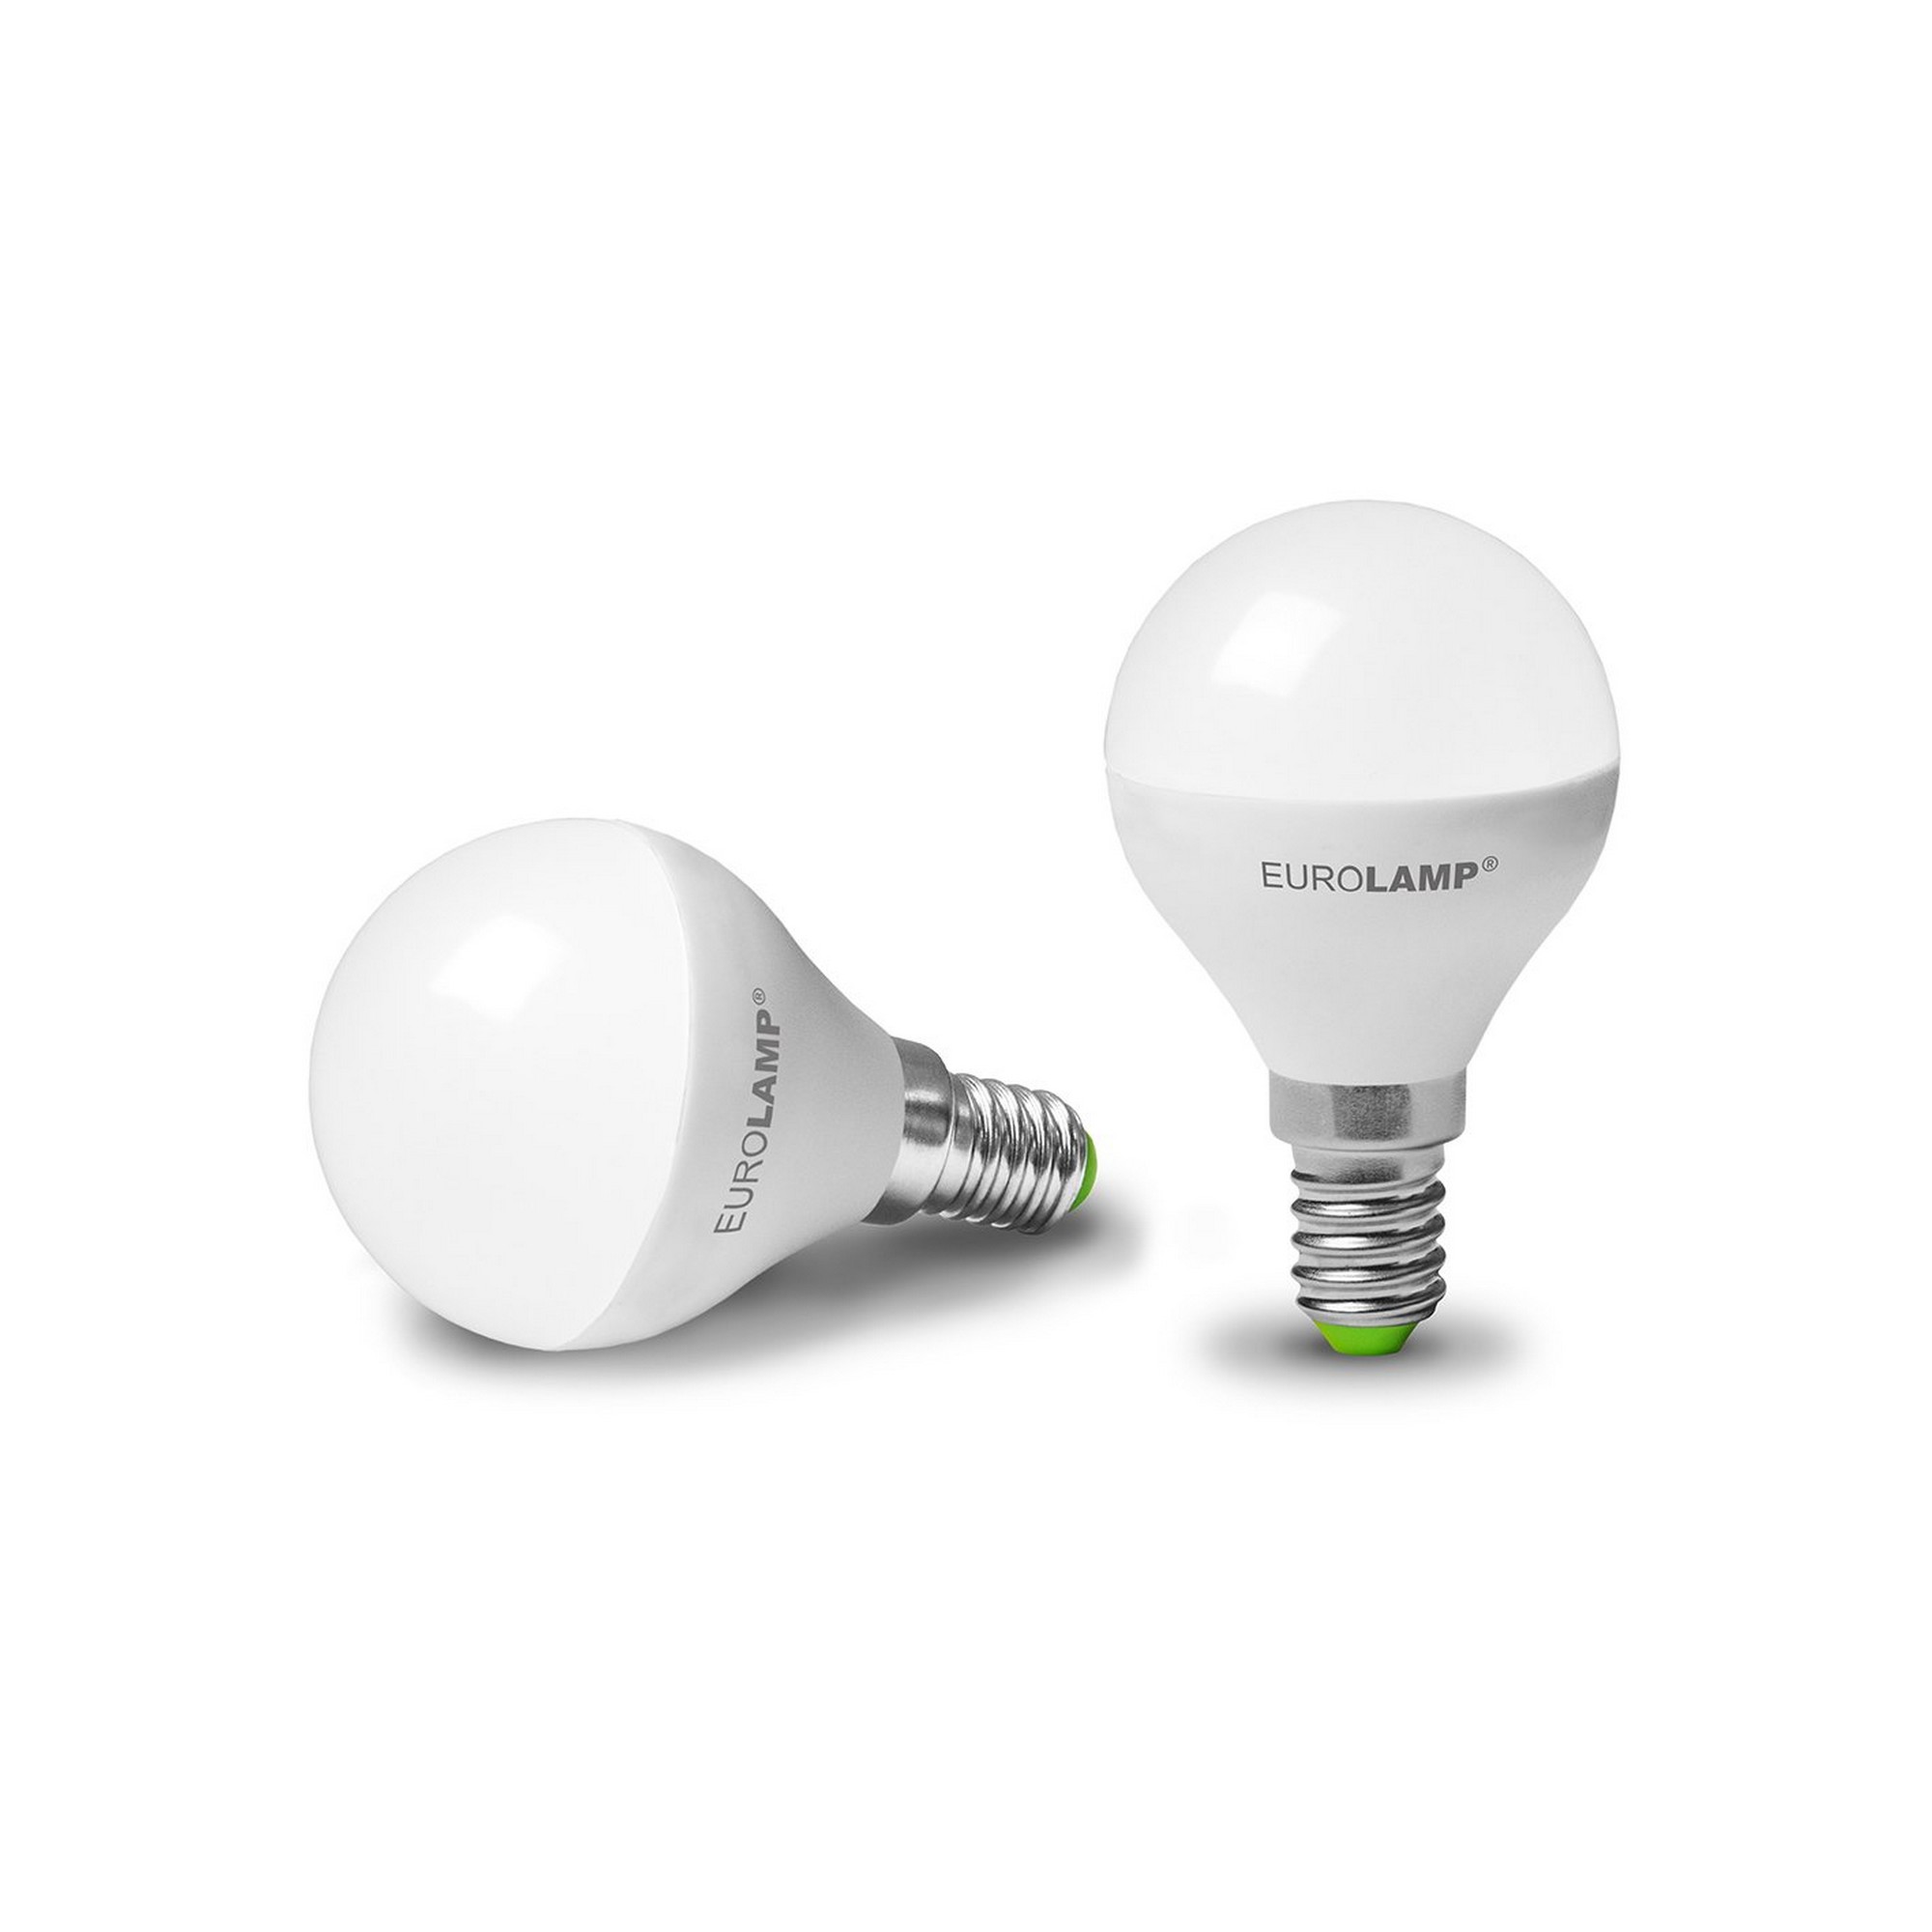 Лампа Eurolamp LED EKO G45 5W E14 3000K акция "1+1" цена 0.00 грн - фотография 2